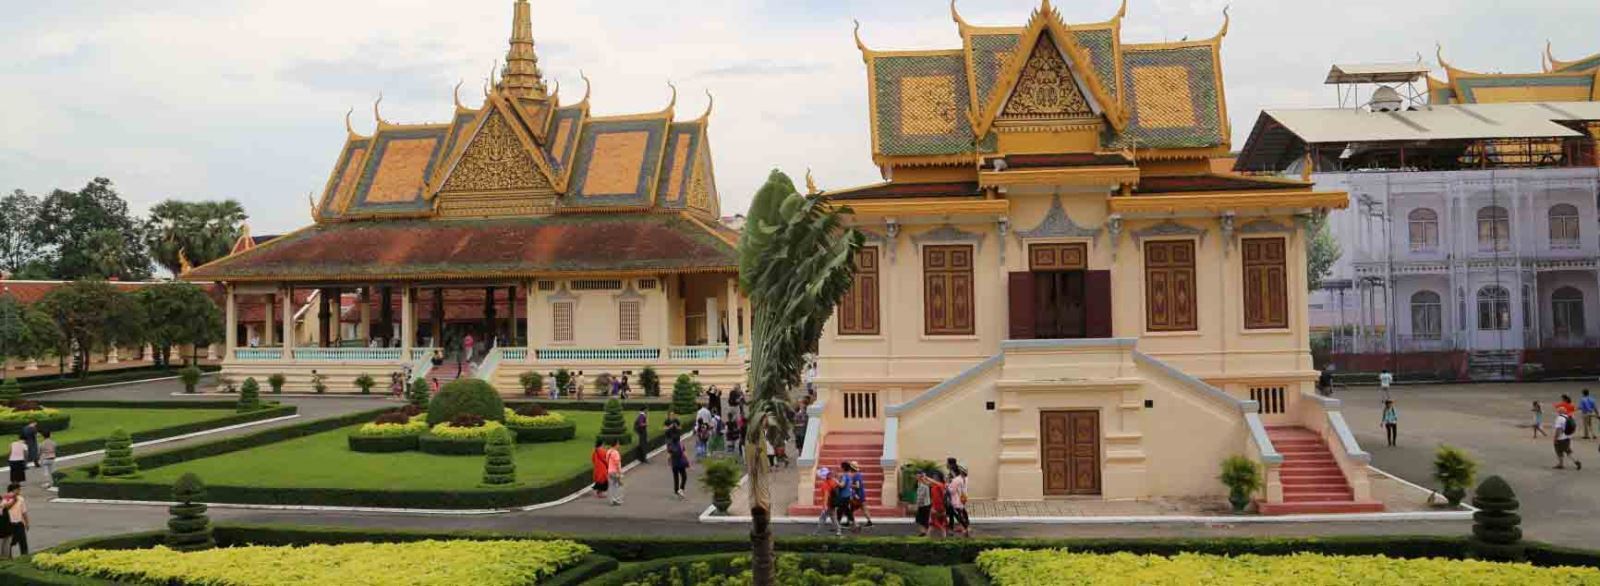 1. The Royal Palace and the Silver Pagoda